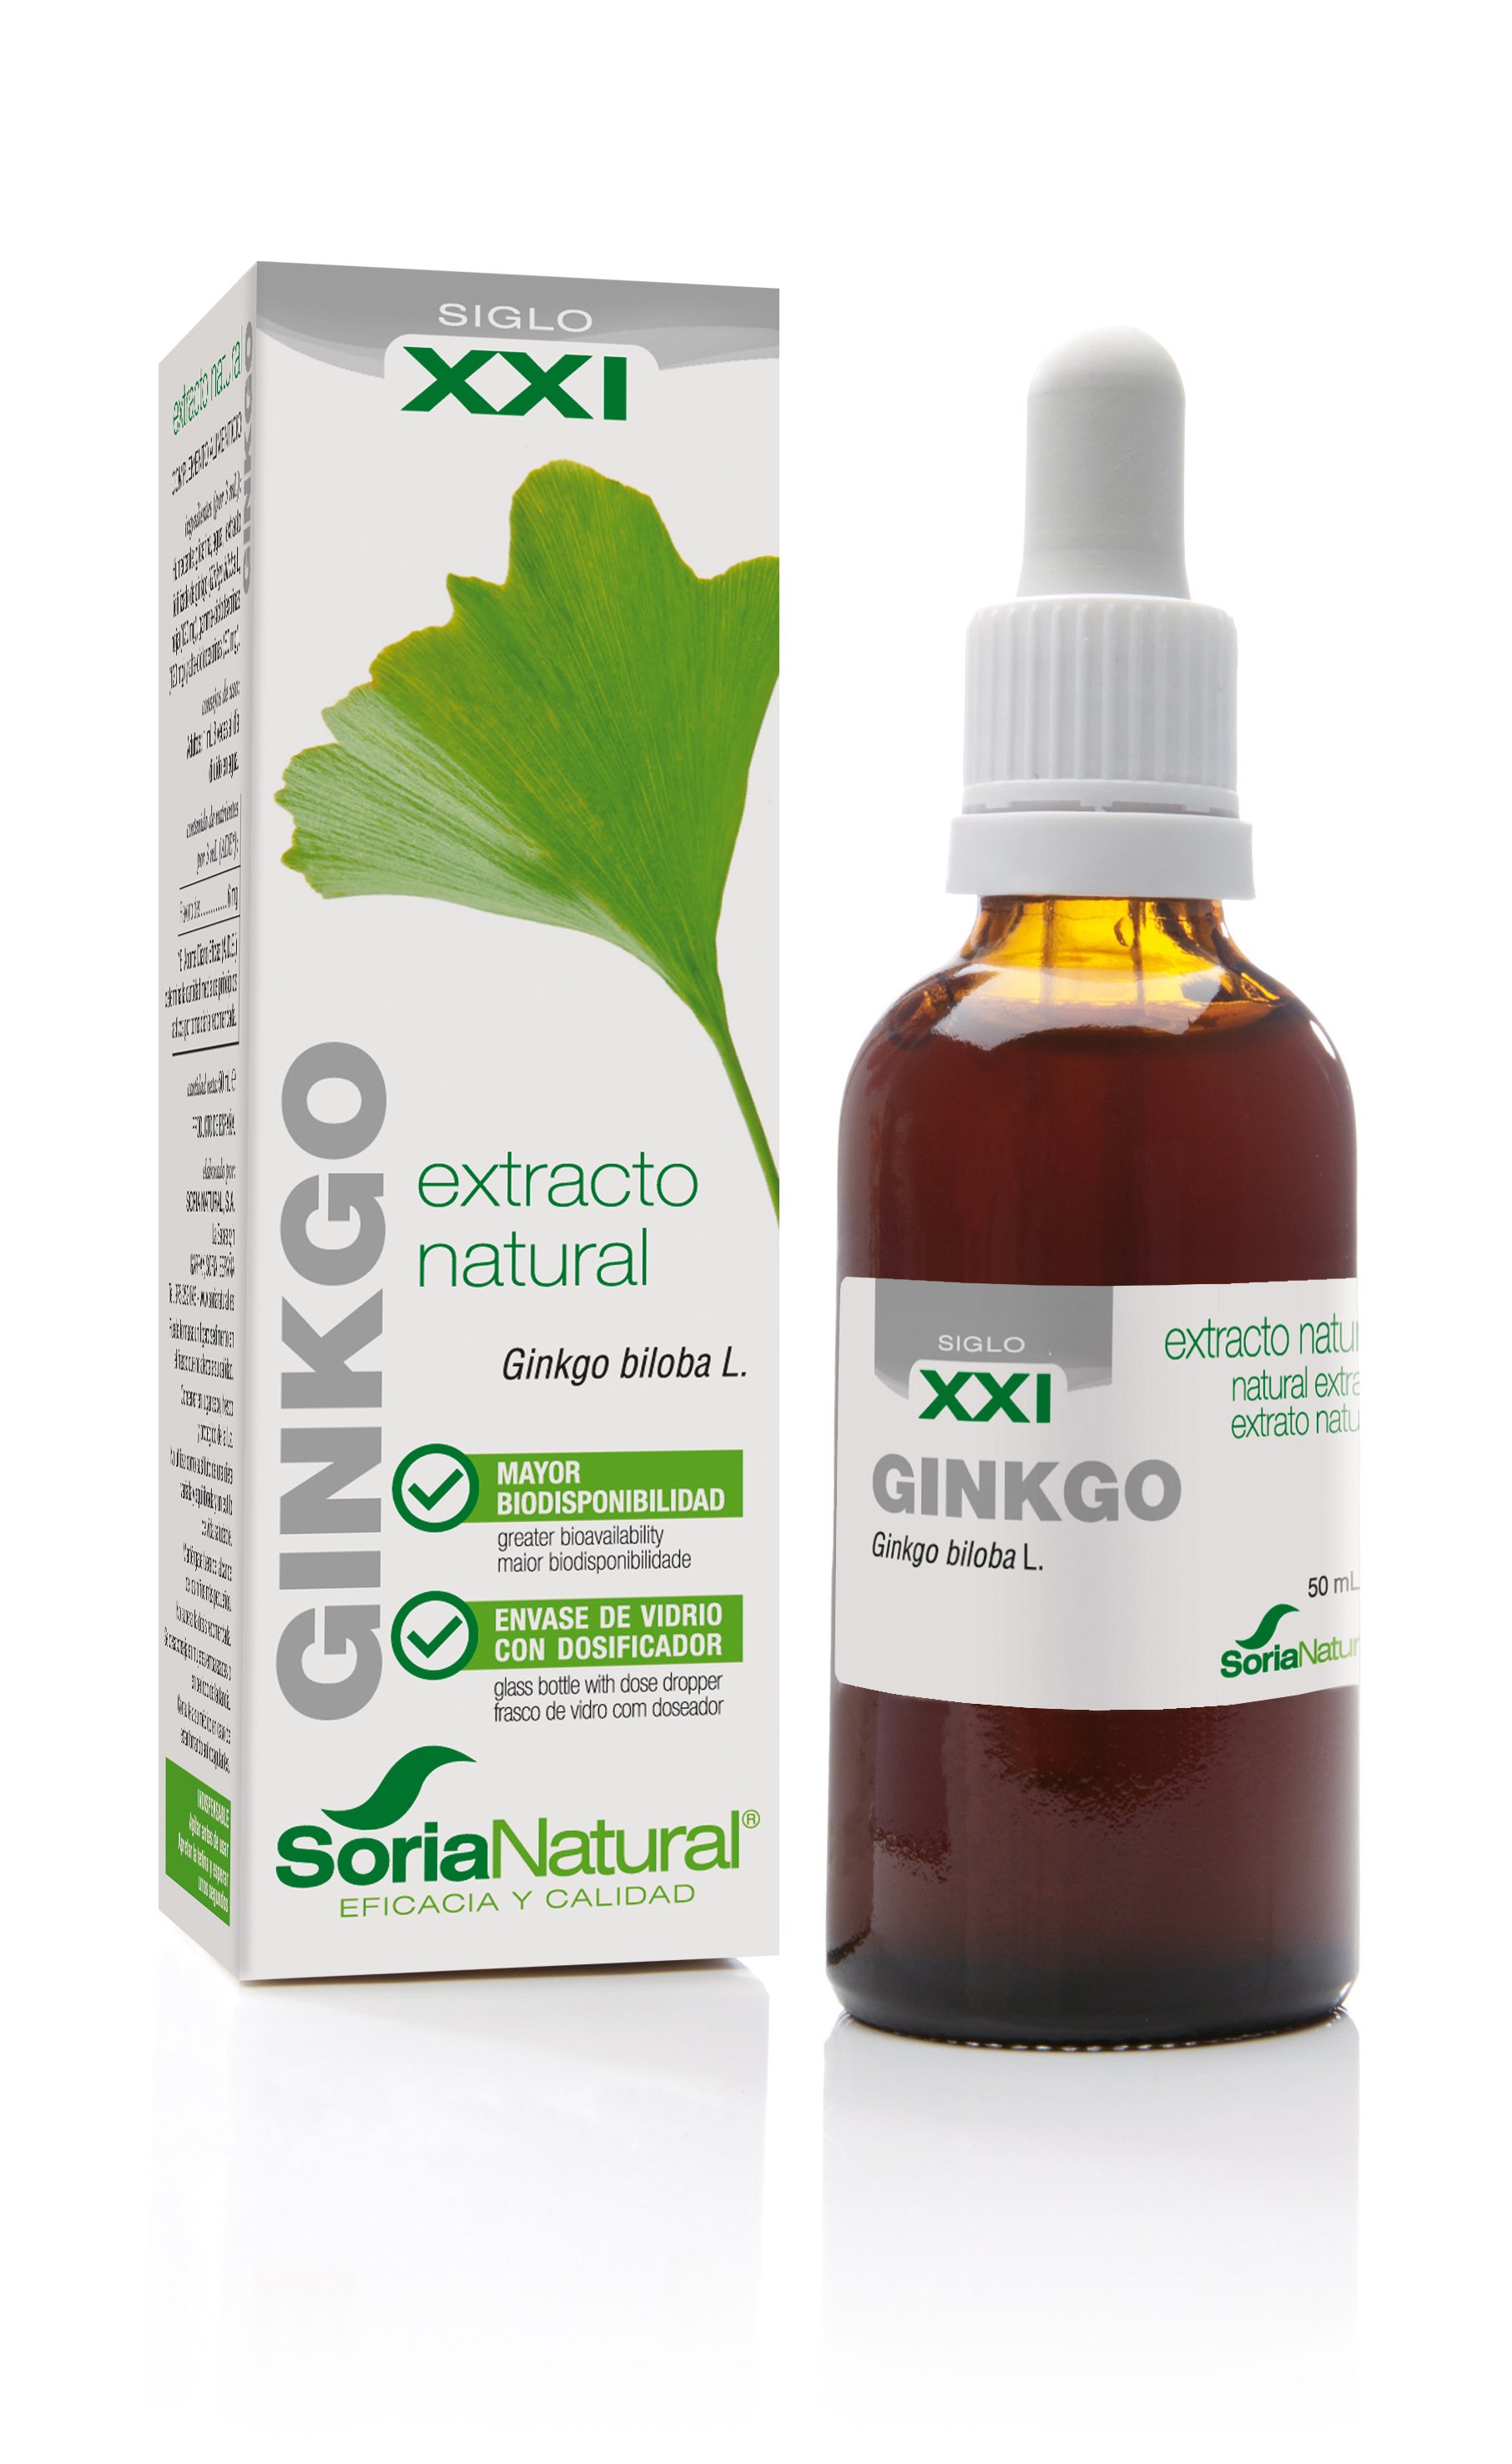 Soria Natural Siglo XXI Extracto natural de Ginkgo Biloba, 50 ml